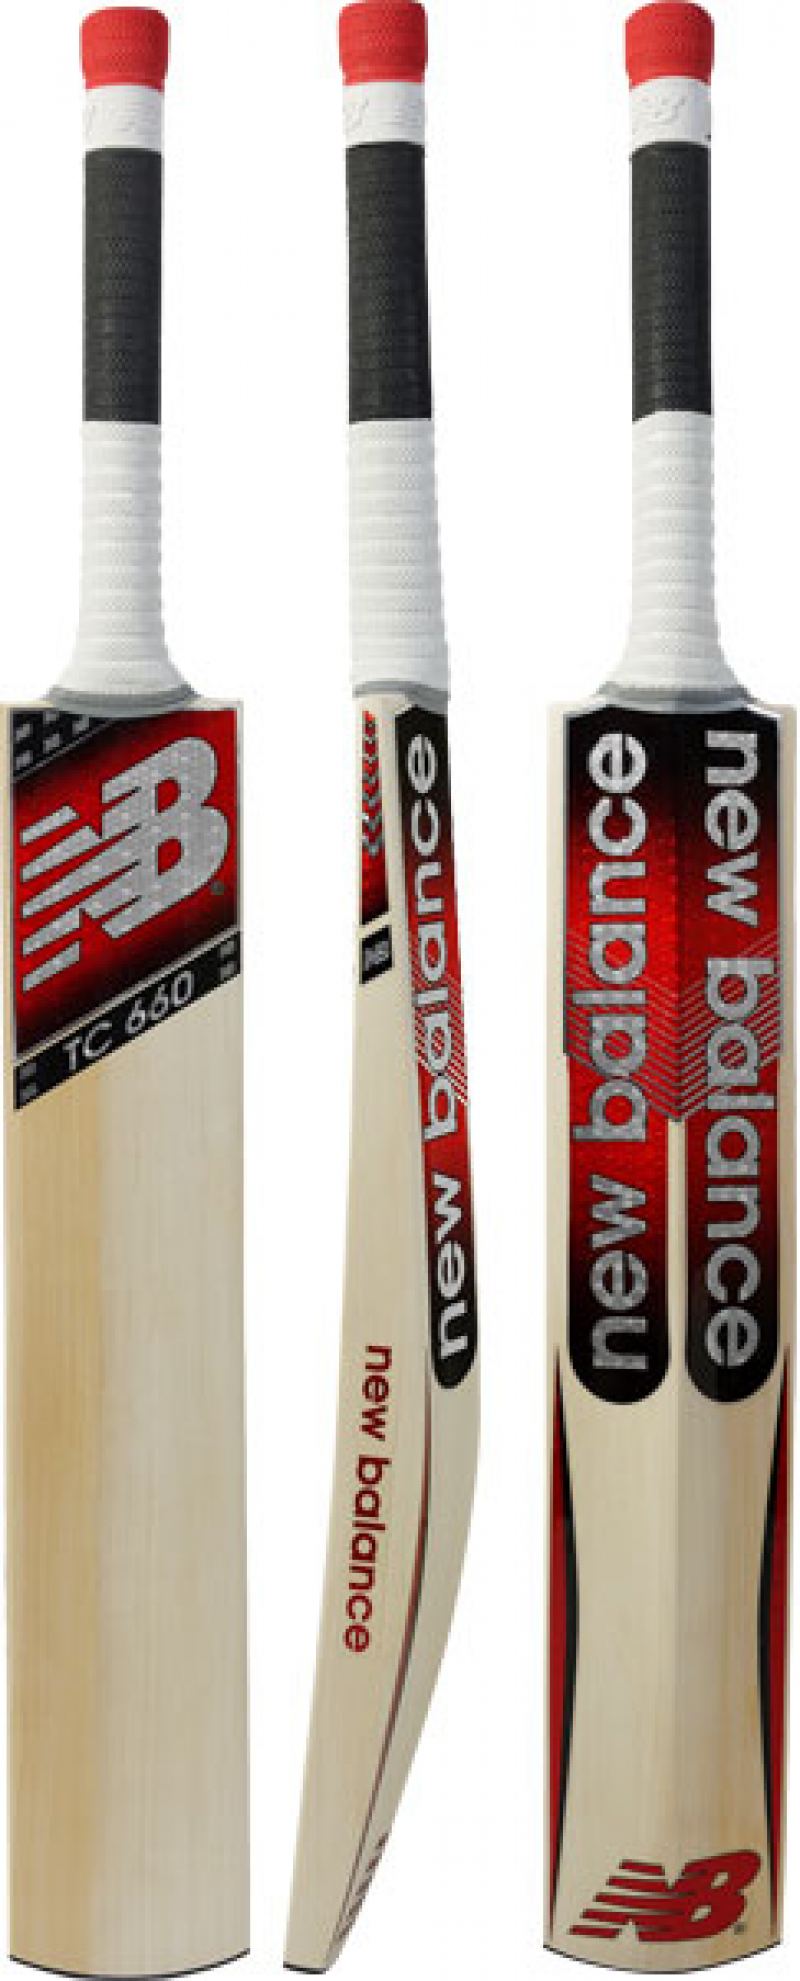 new balance cricket bats 2018